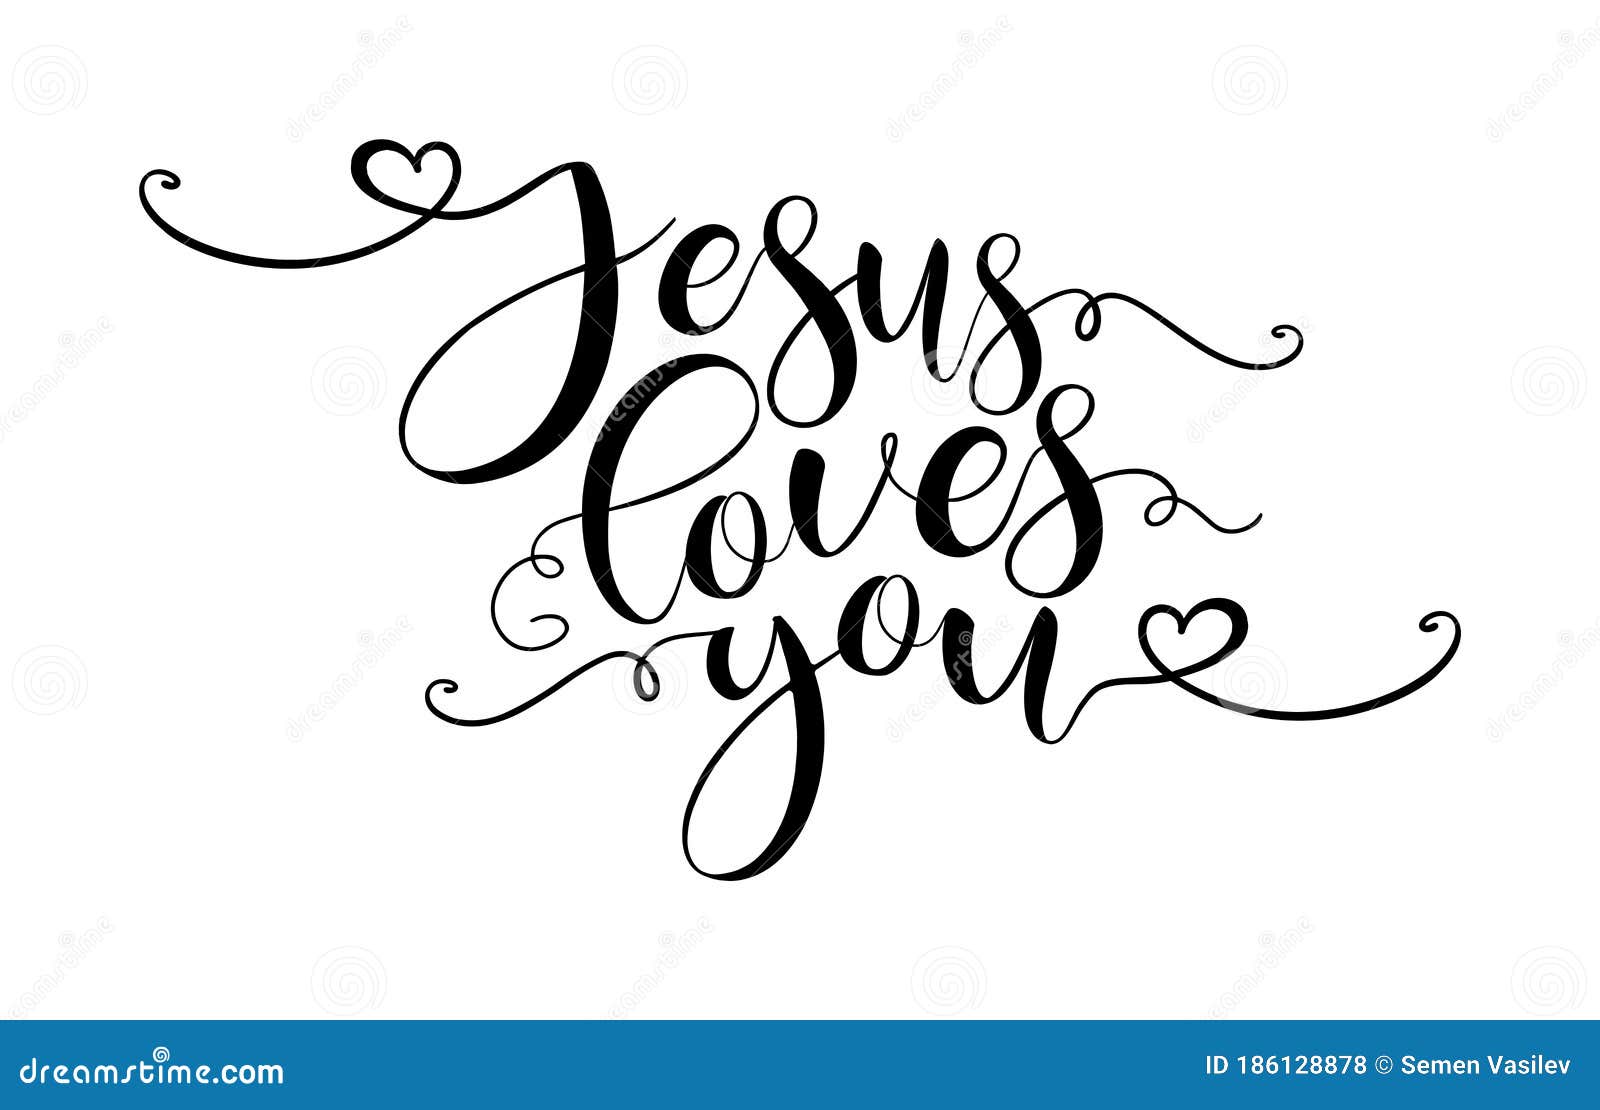 jesus loves you. christian, bible, religious phrase, quot.